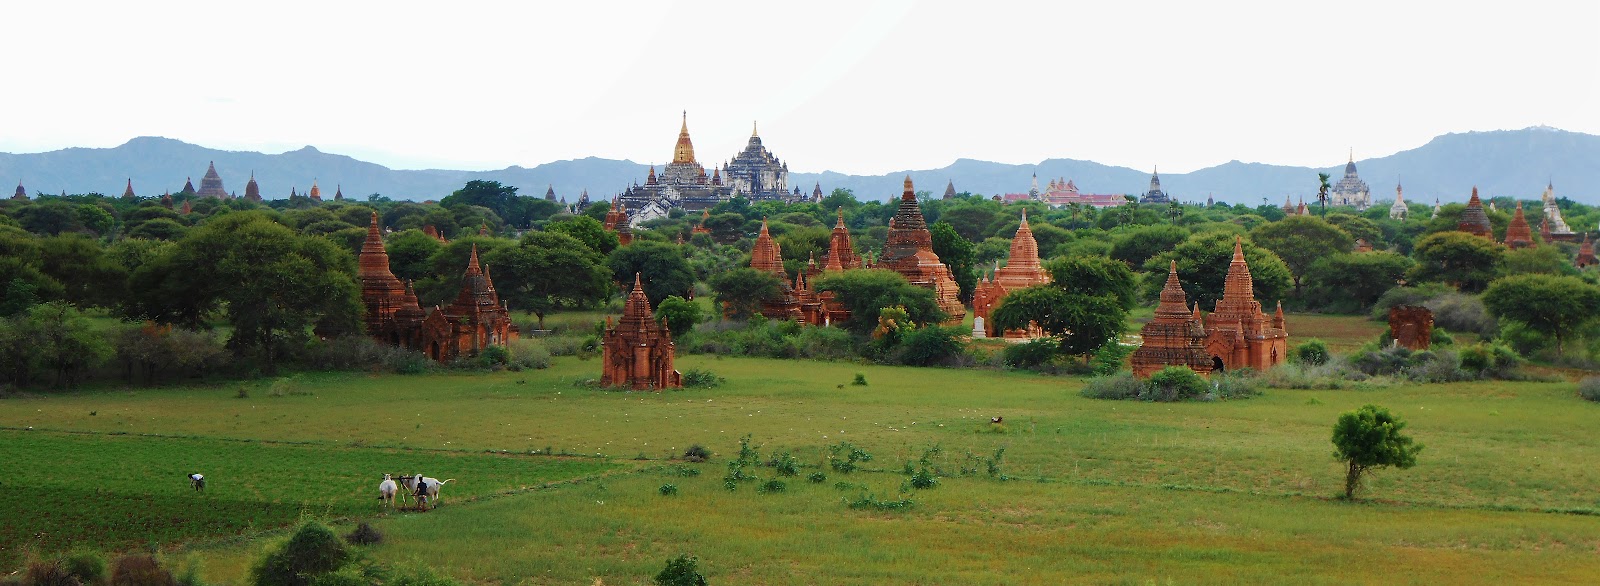 Brett and Kiersten's Travels: Myanmar/Burma part 1 - Yangon, Pyay, and ...